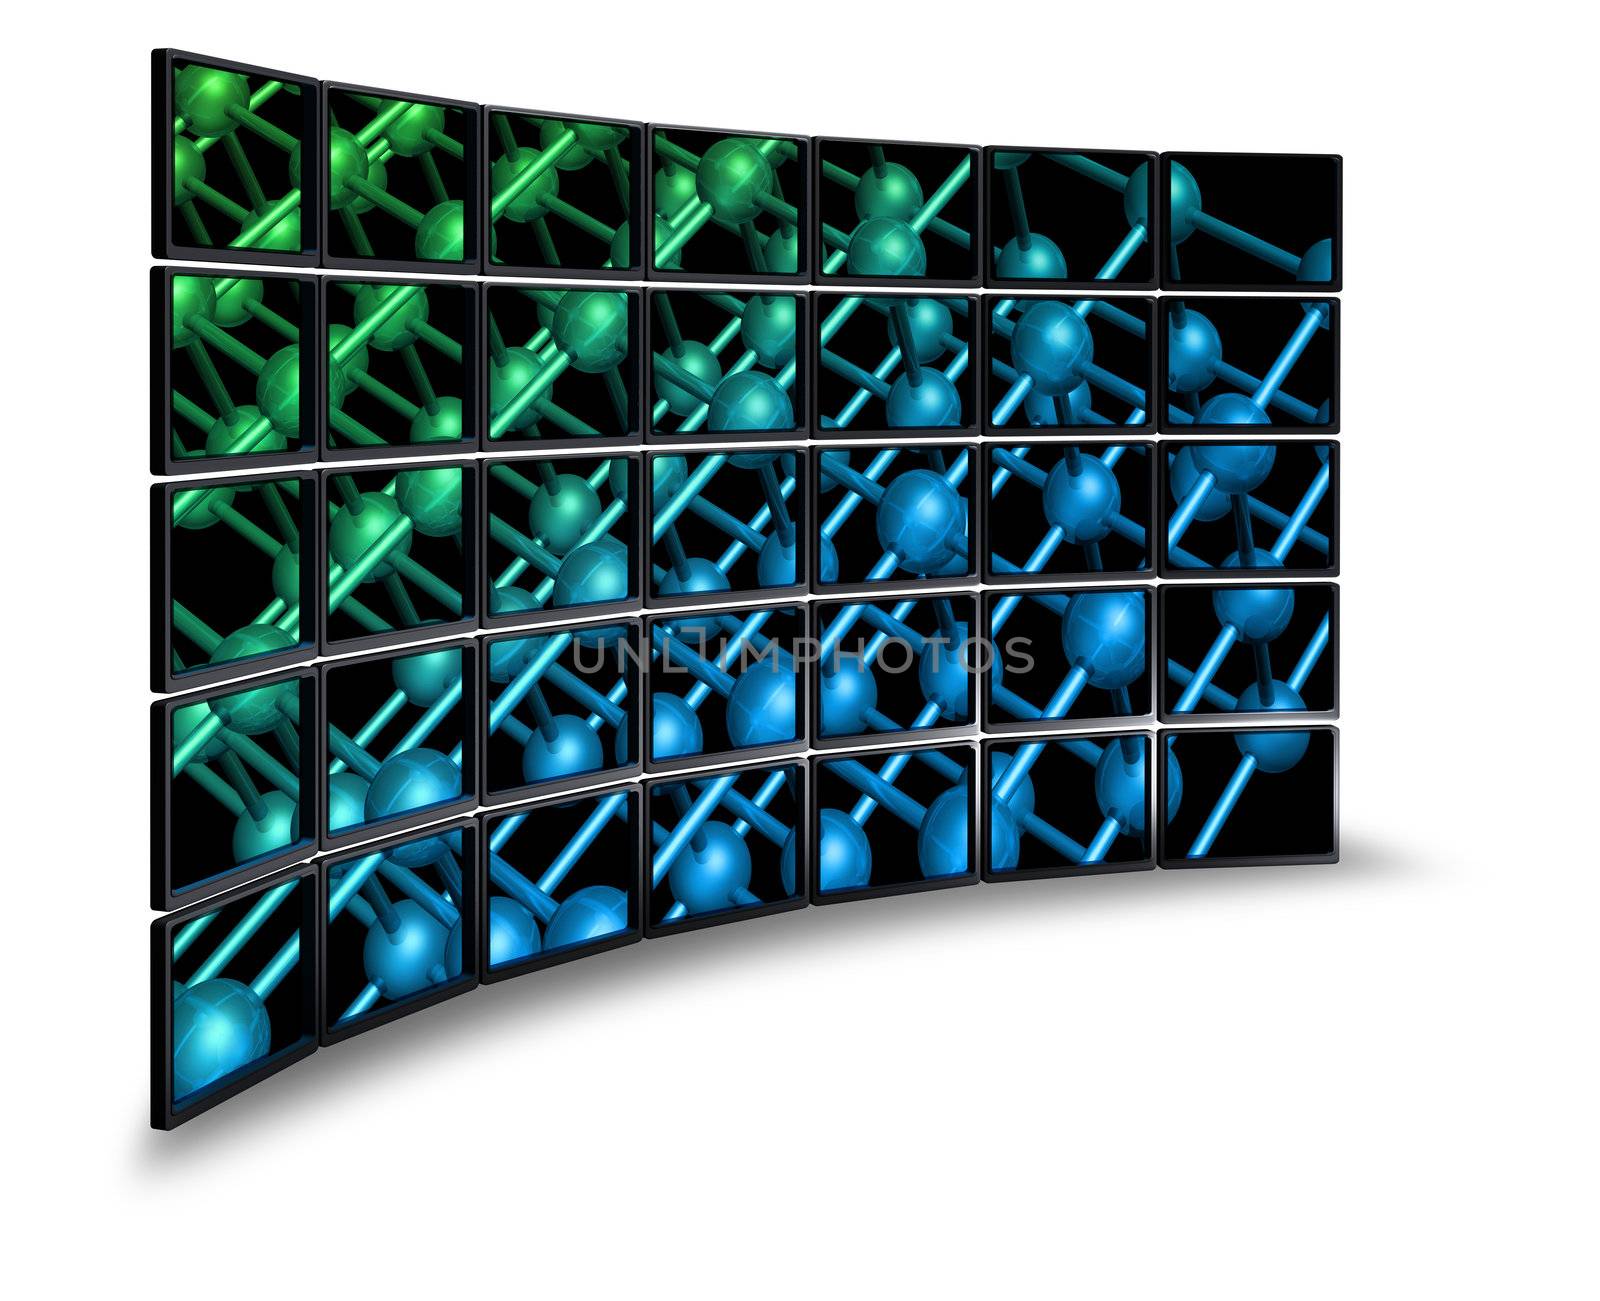 Multimedia monitor wall by anterovium